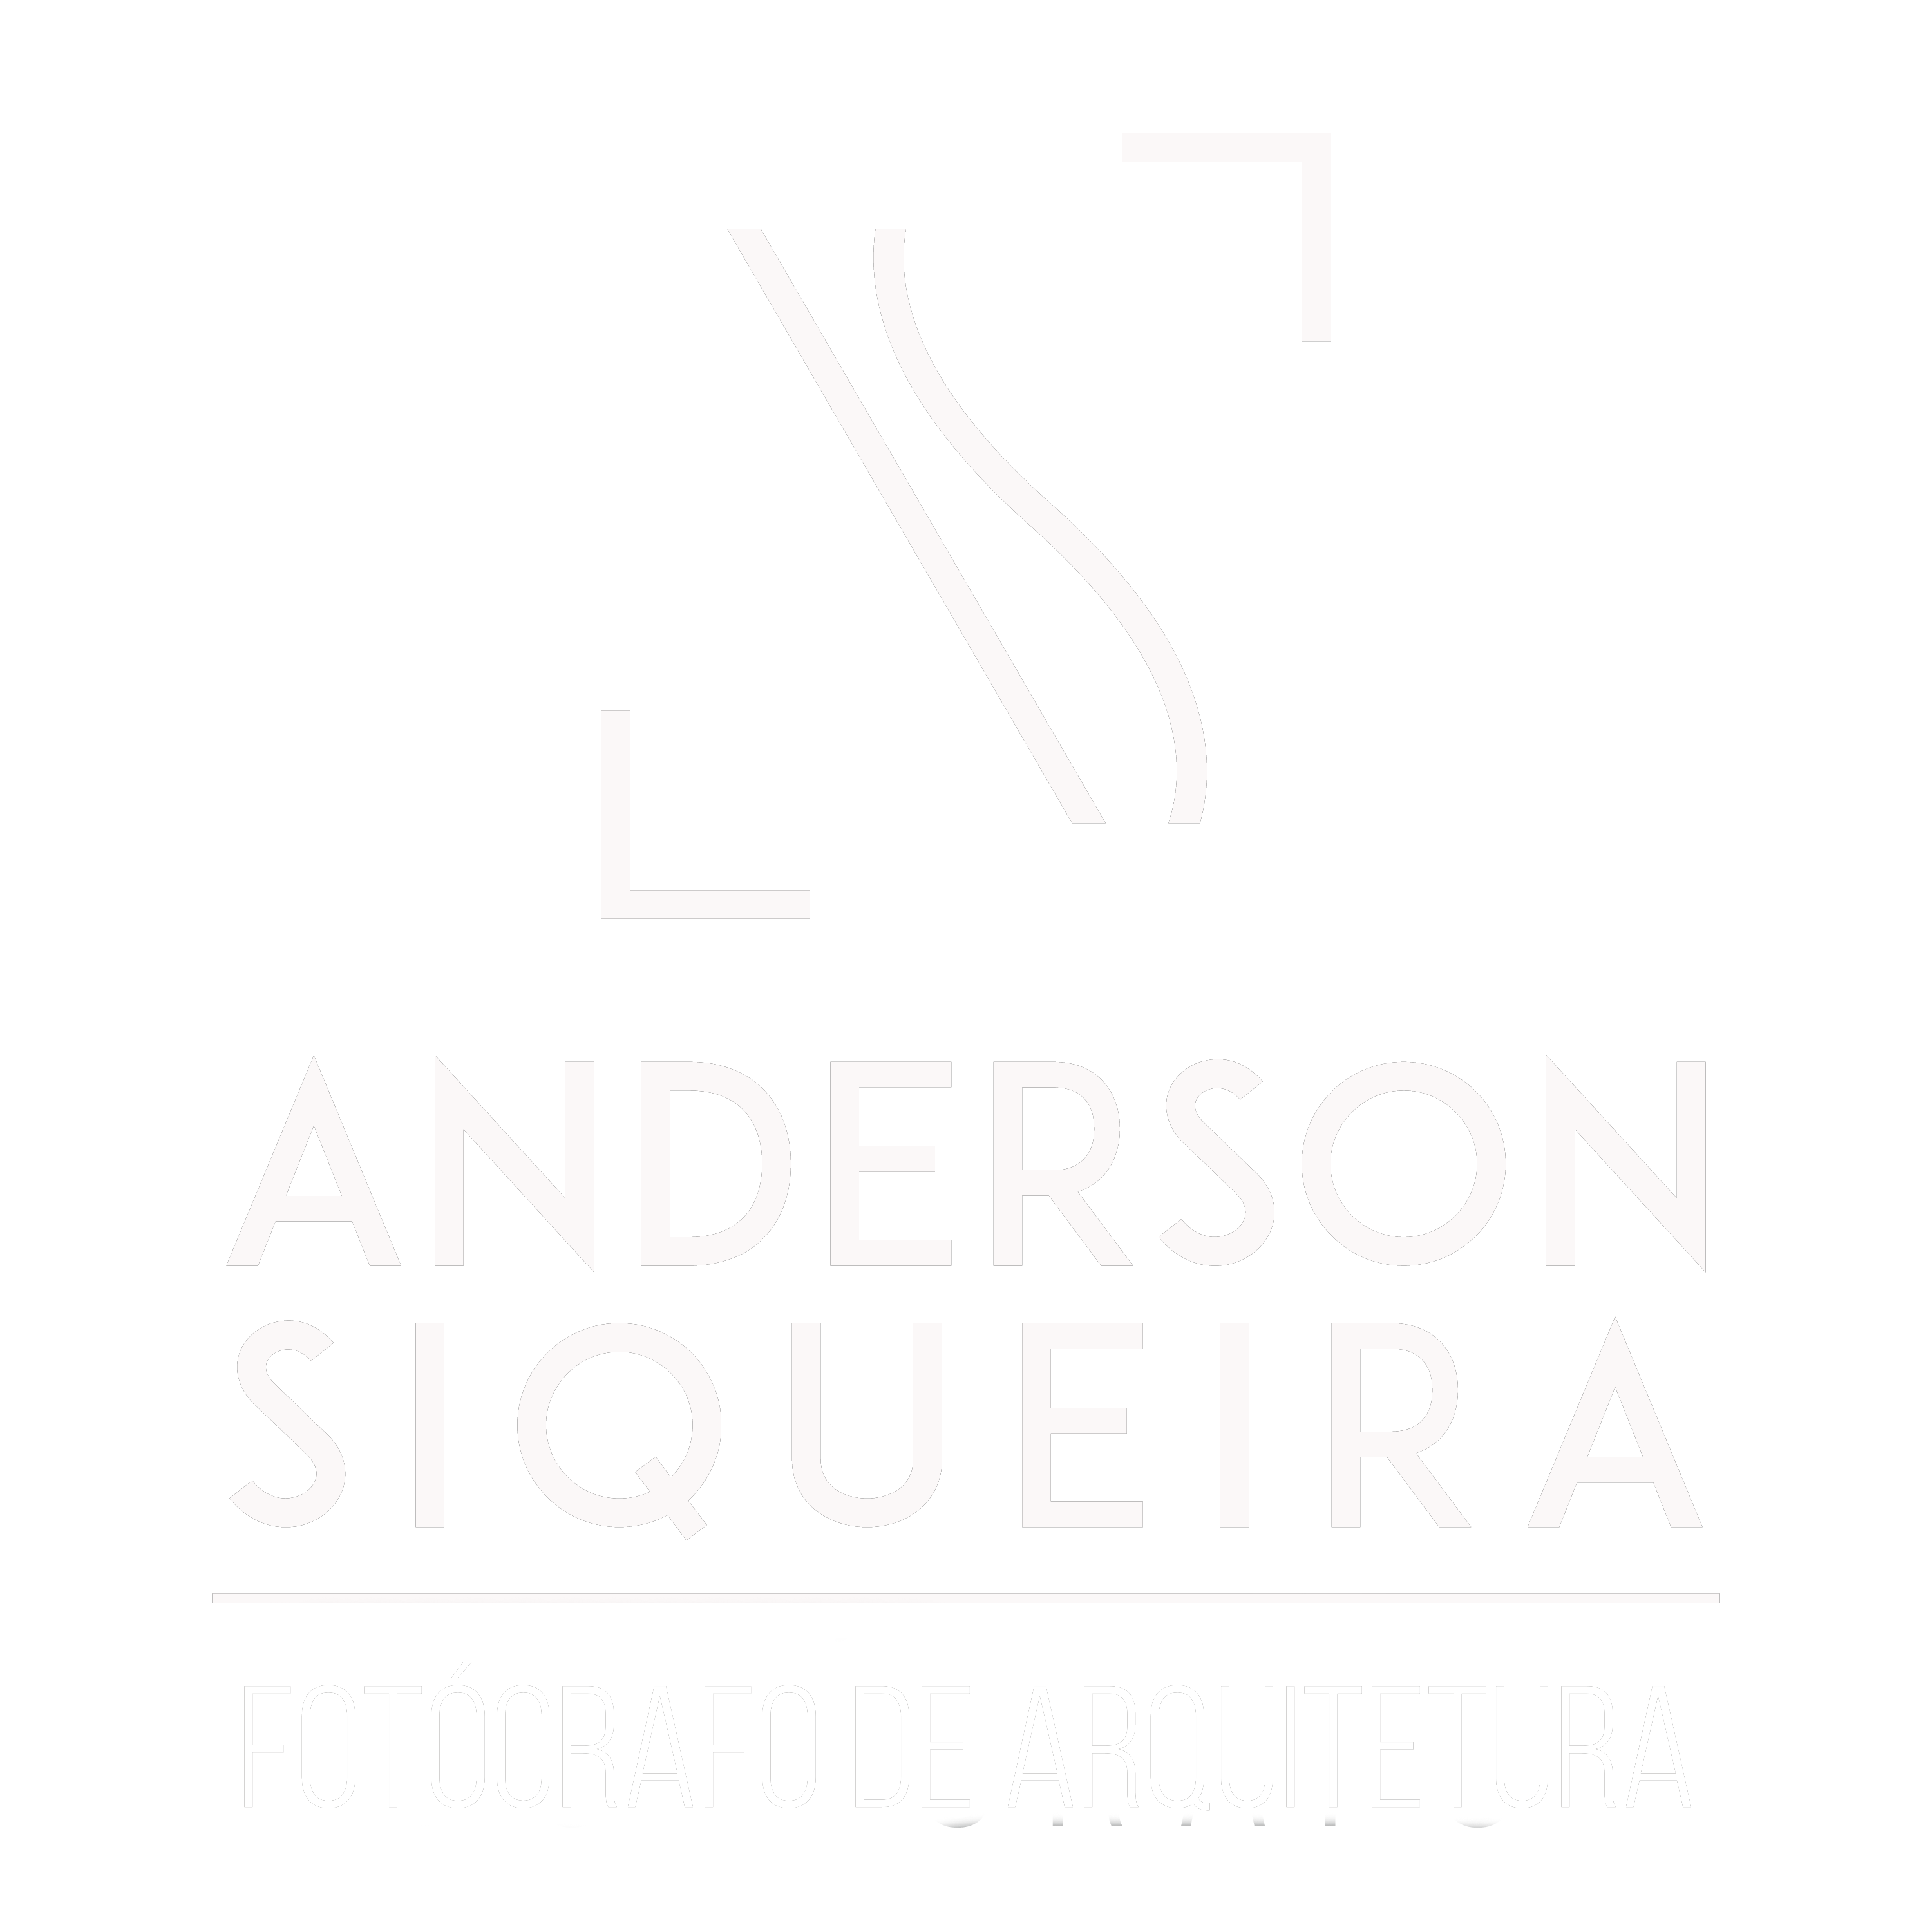 Anderson Siqueira